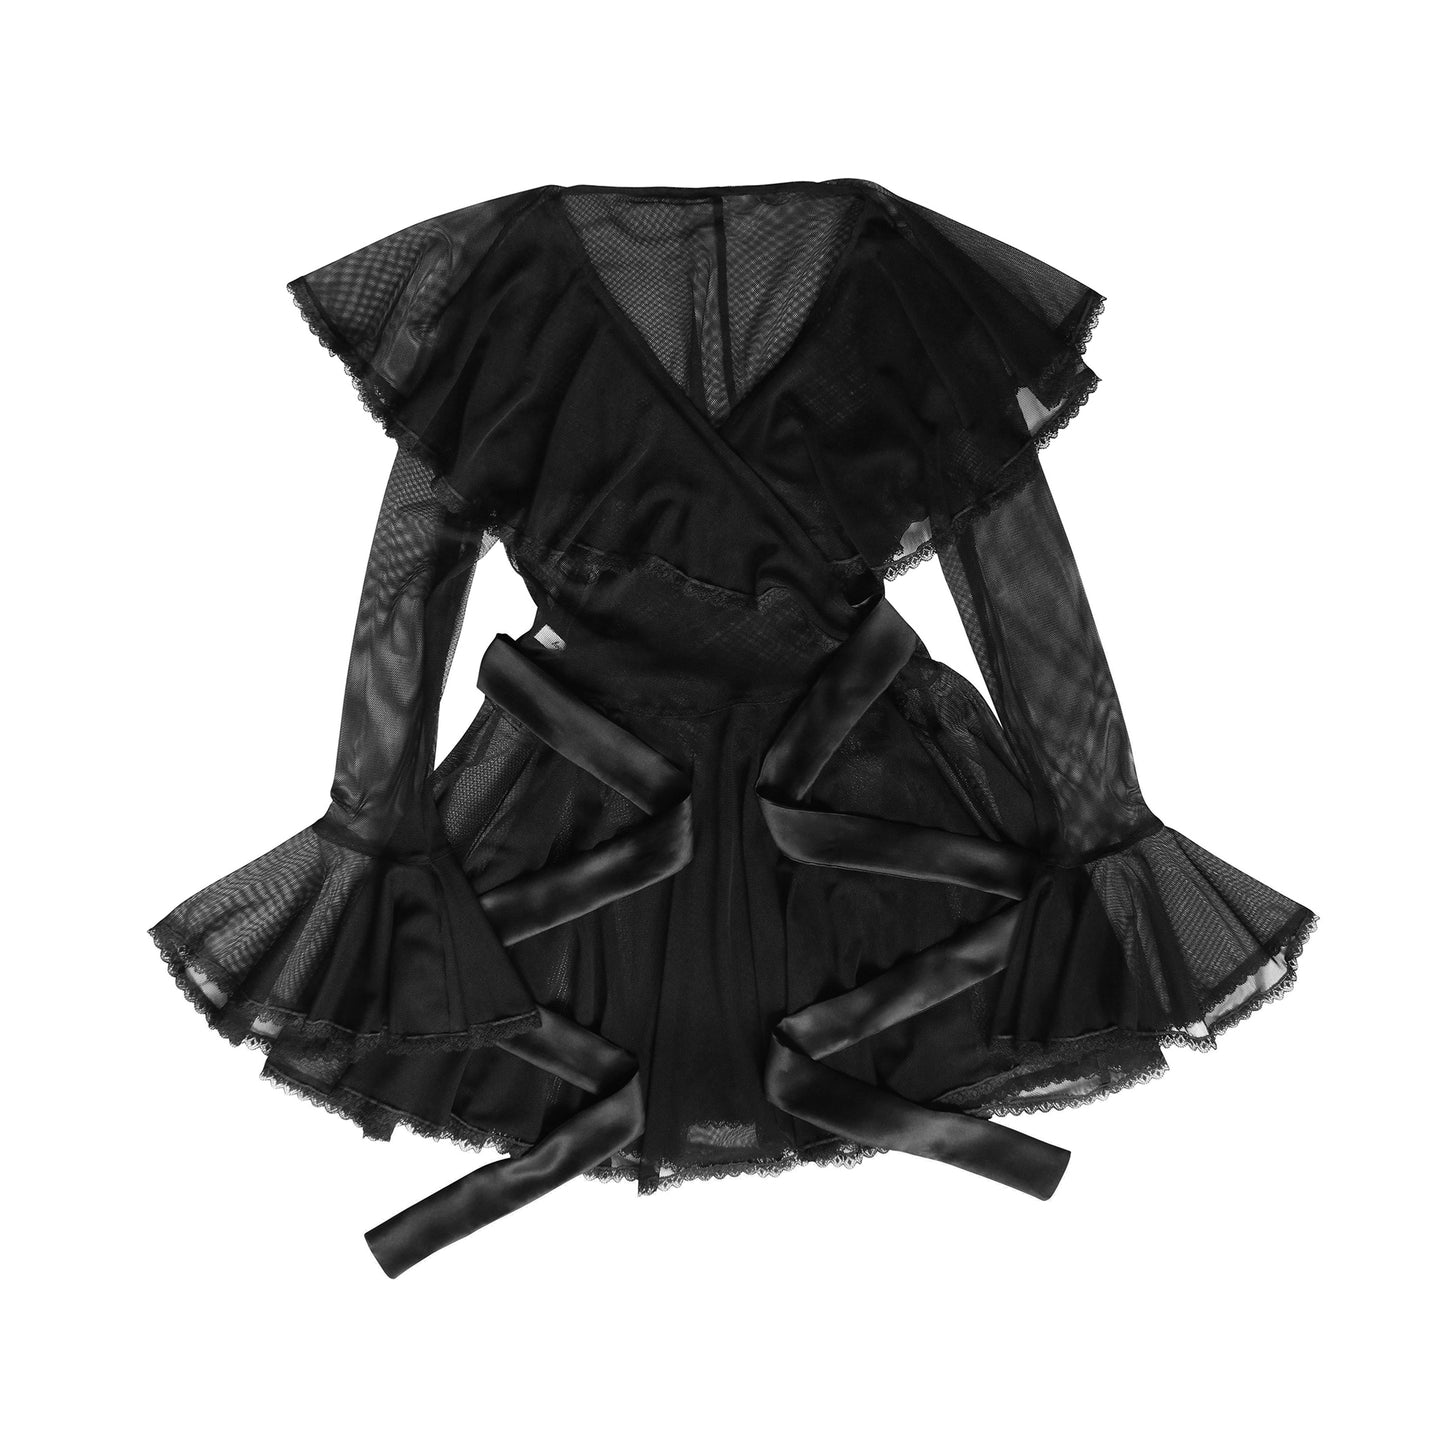 Claudette Dressing Gown Black Mesh with Lace Trim